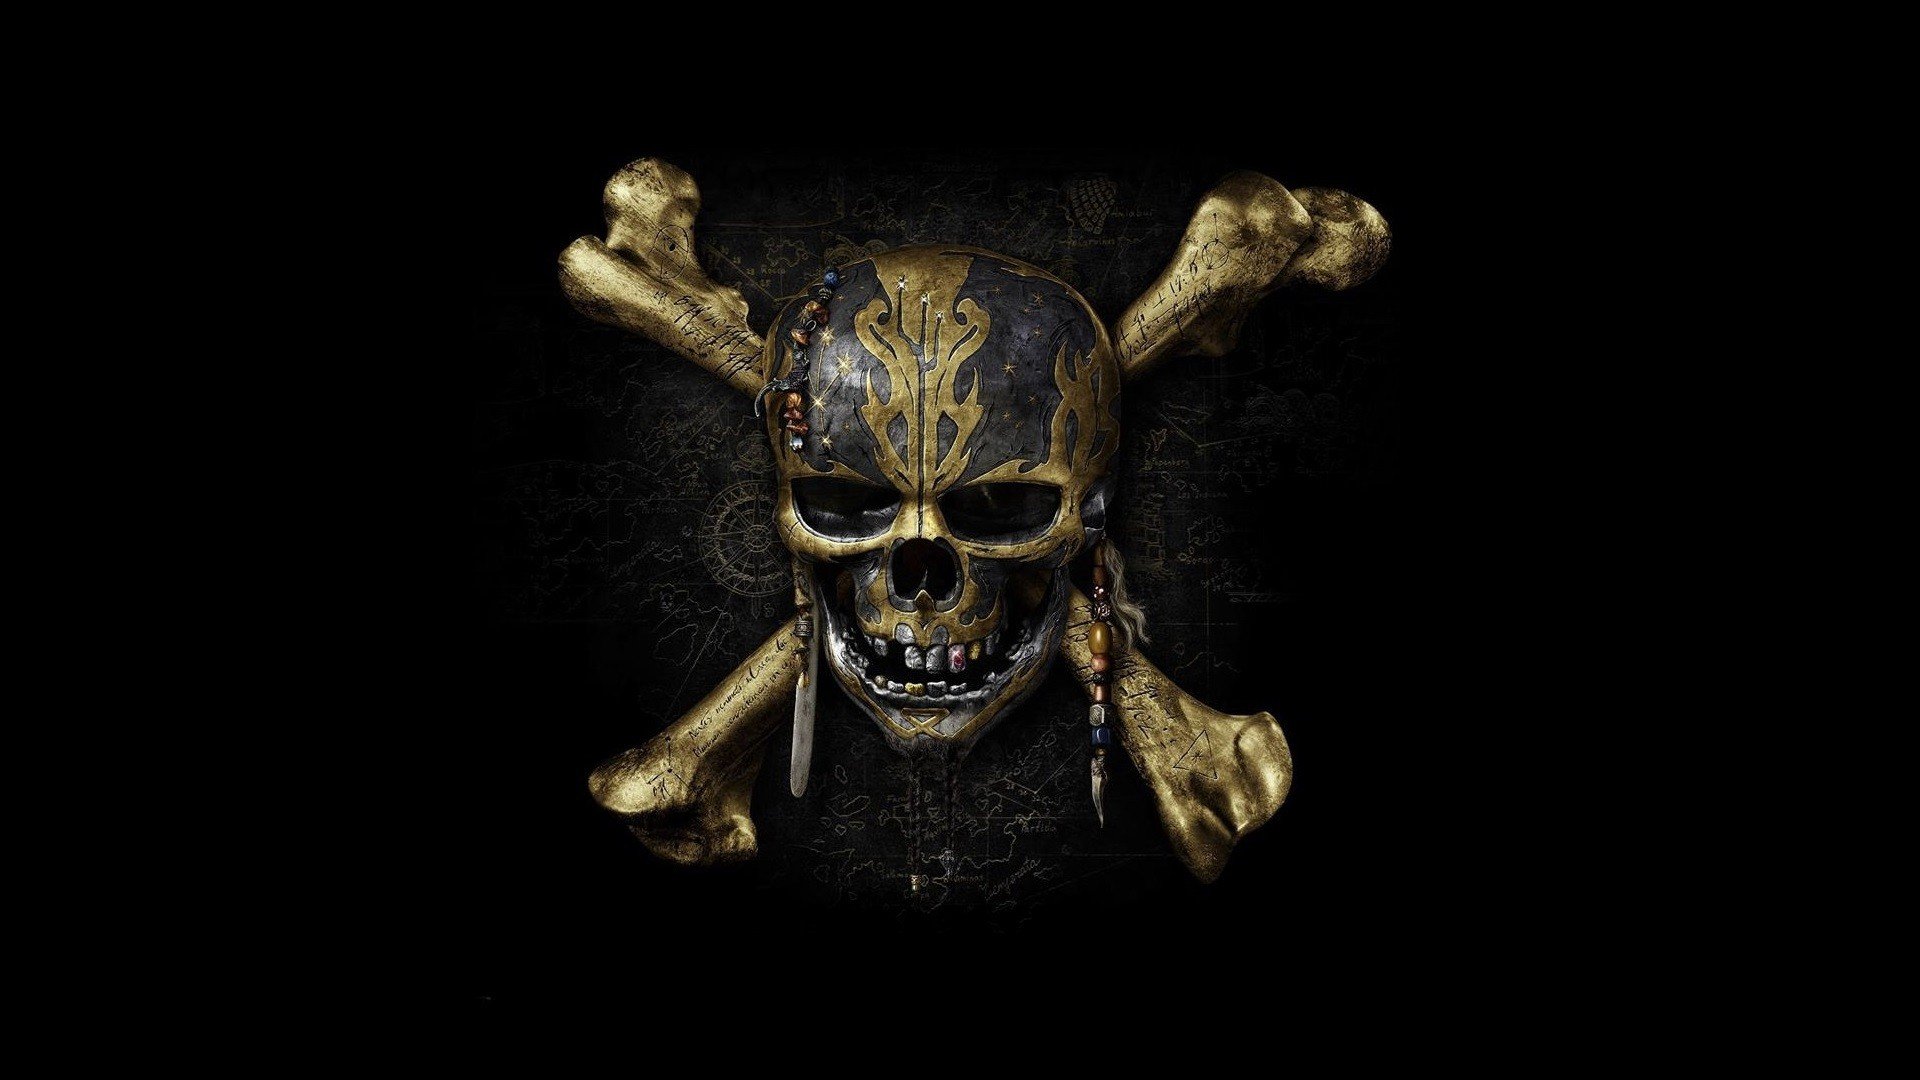 Pirates of the Caribbean: Dead Men Tell No Tales, Skull, Black background, Skull and bones Wallpaper